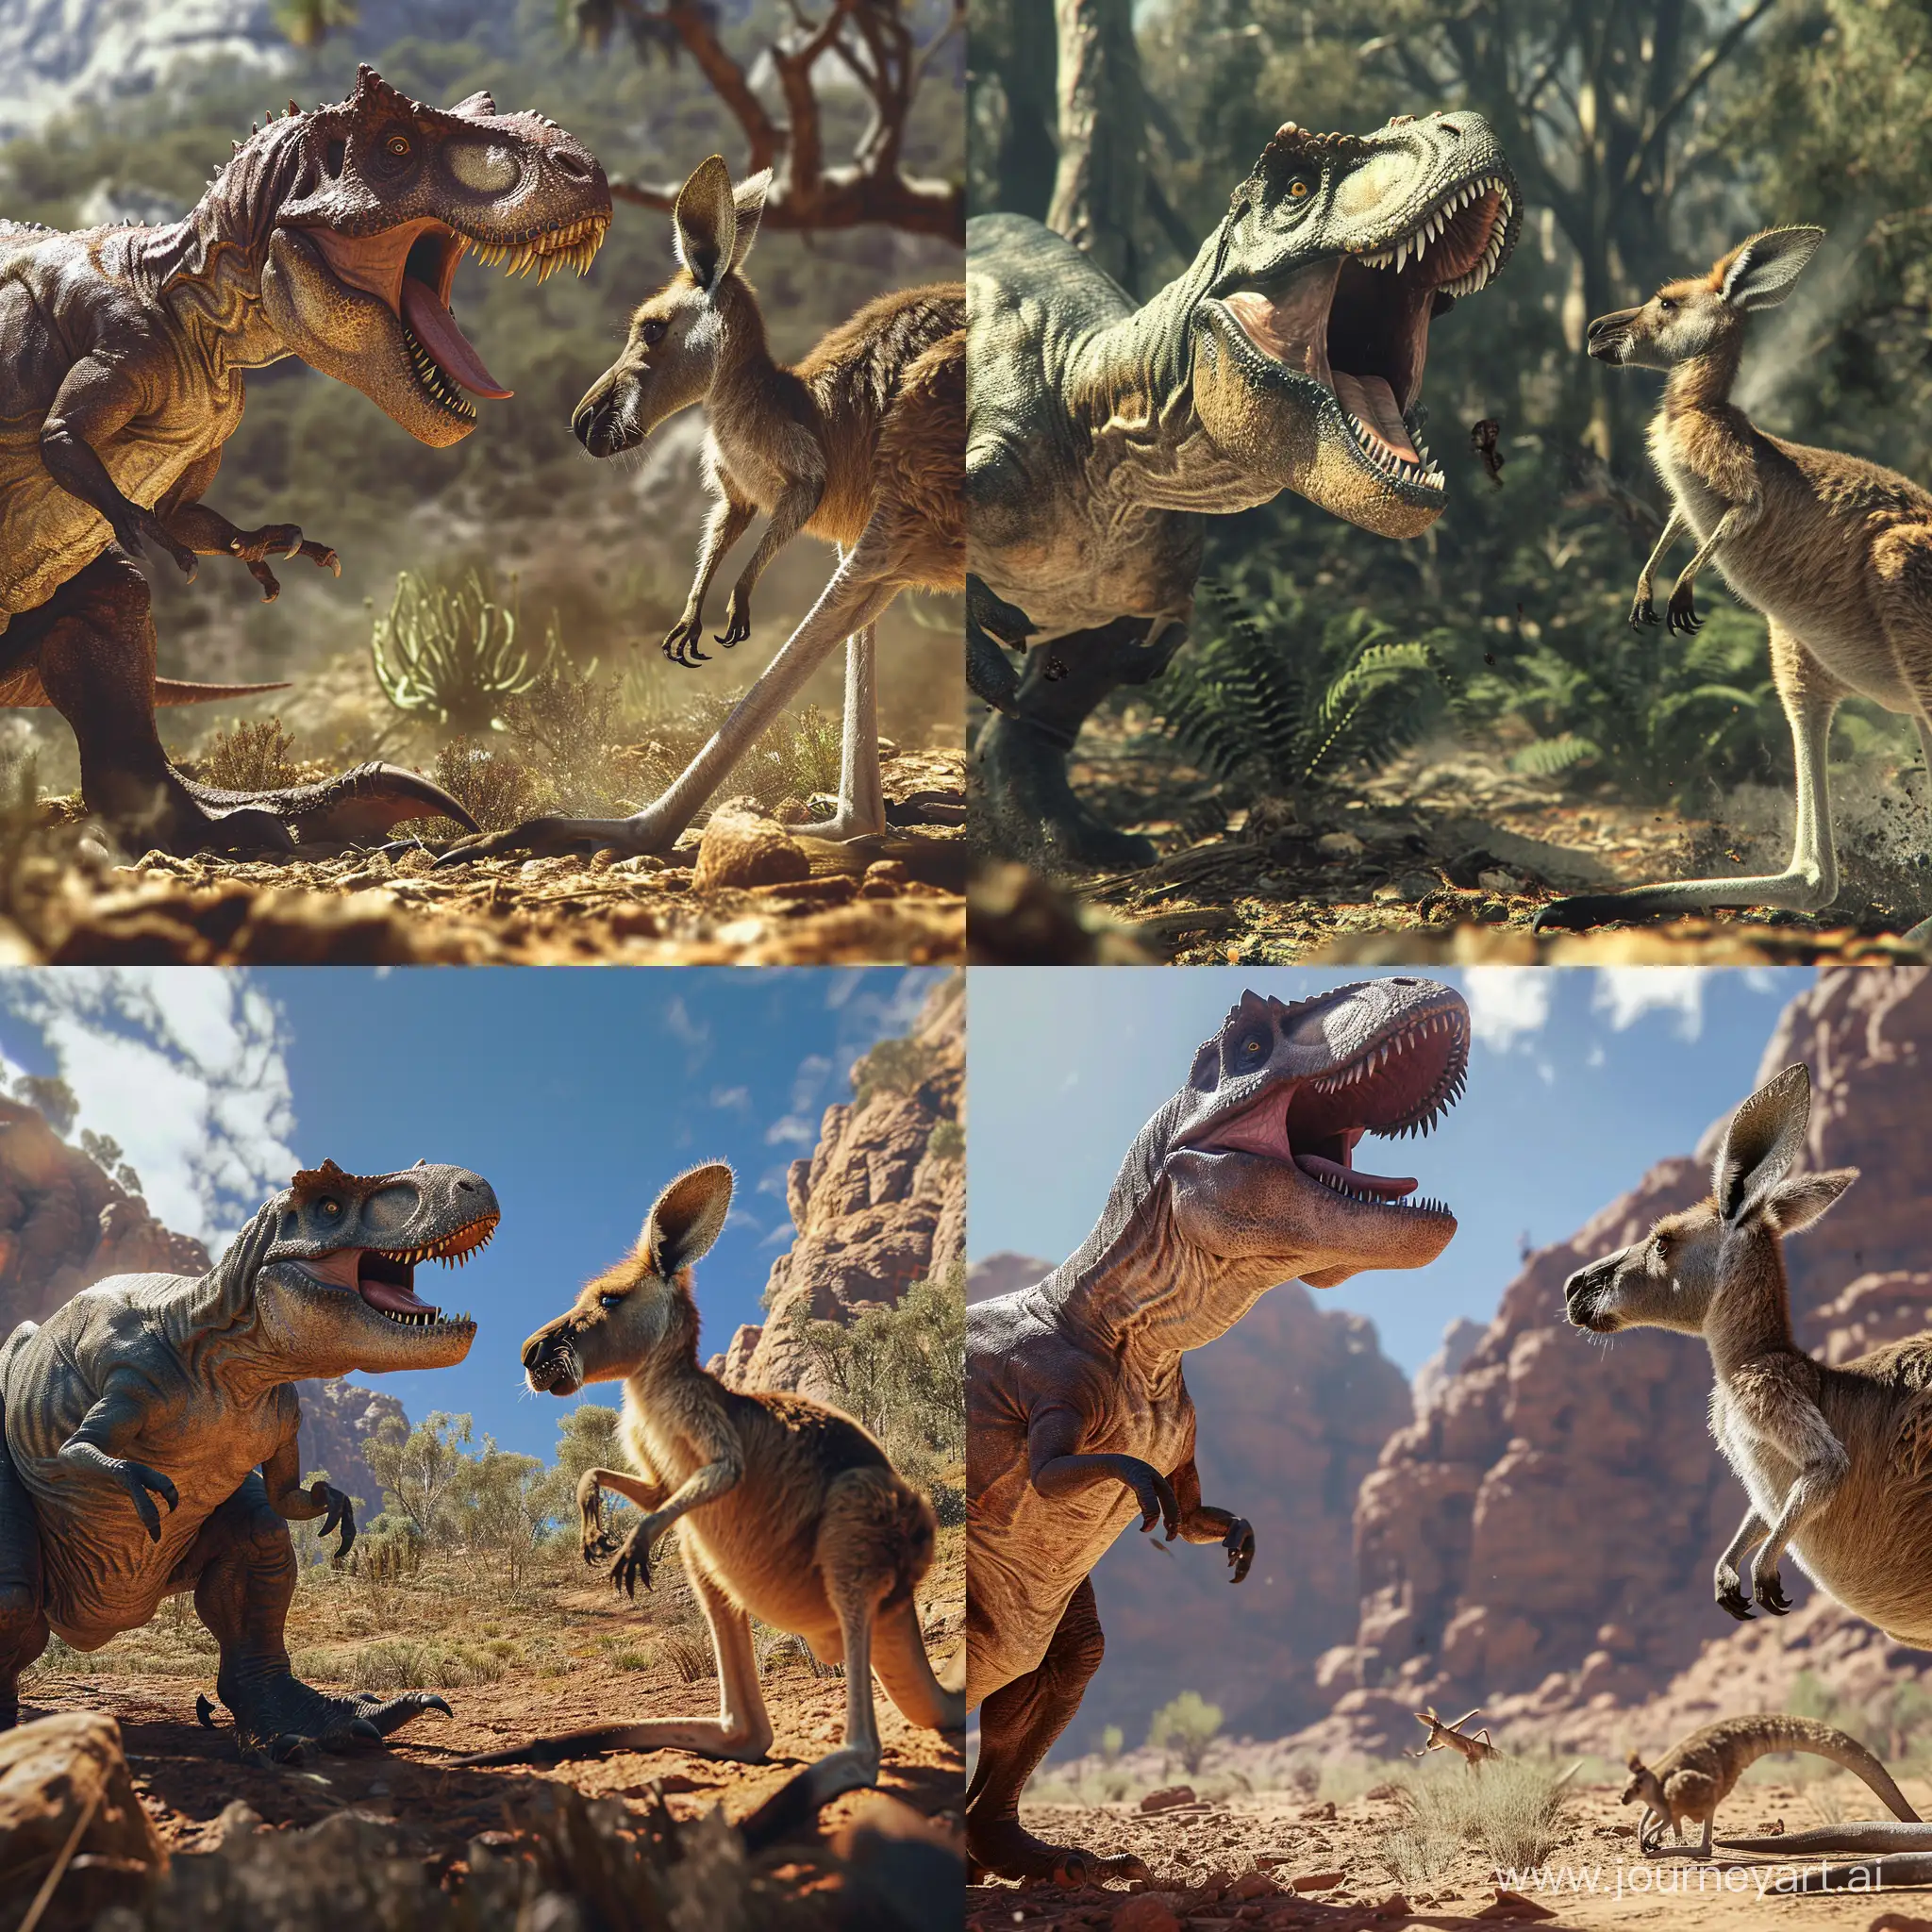 Epic-Dinosaur-vs-Kangaroo-Battle-in-Unreal-Engine-Panorama